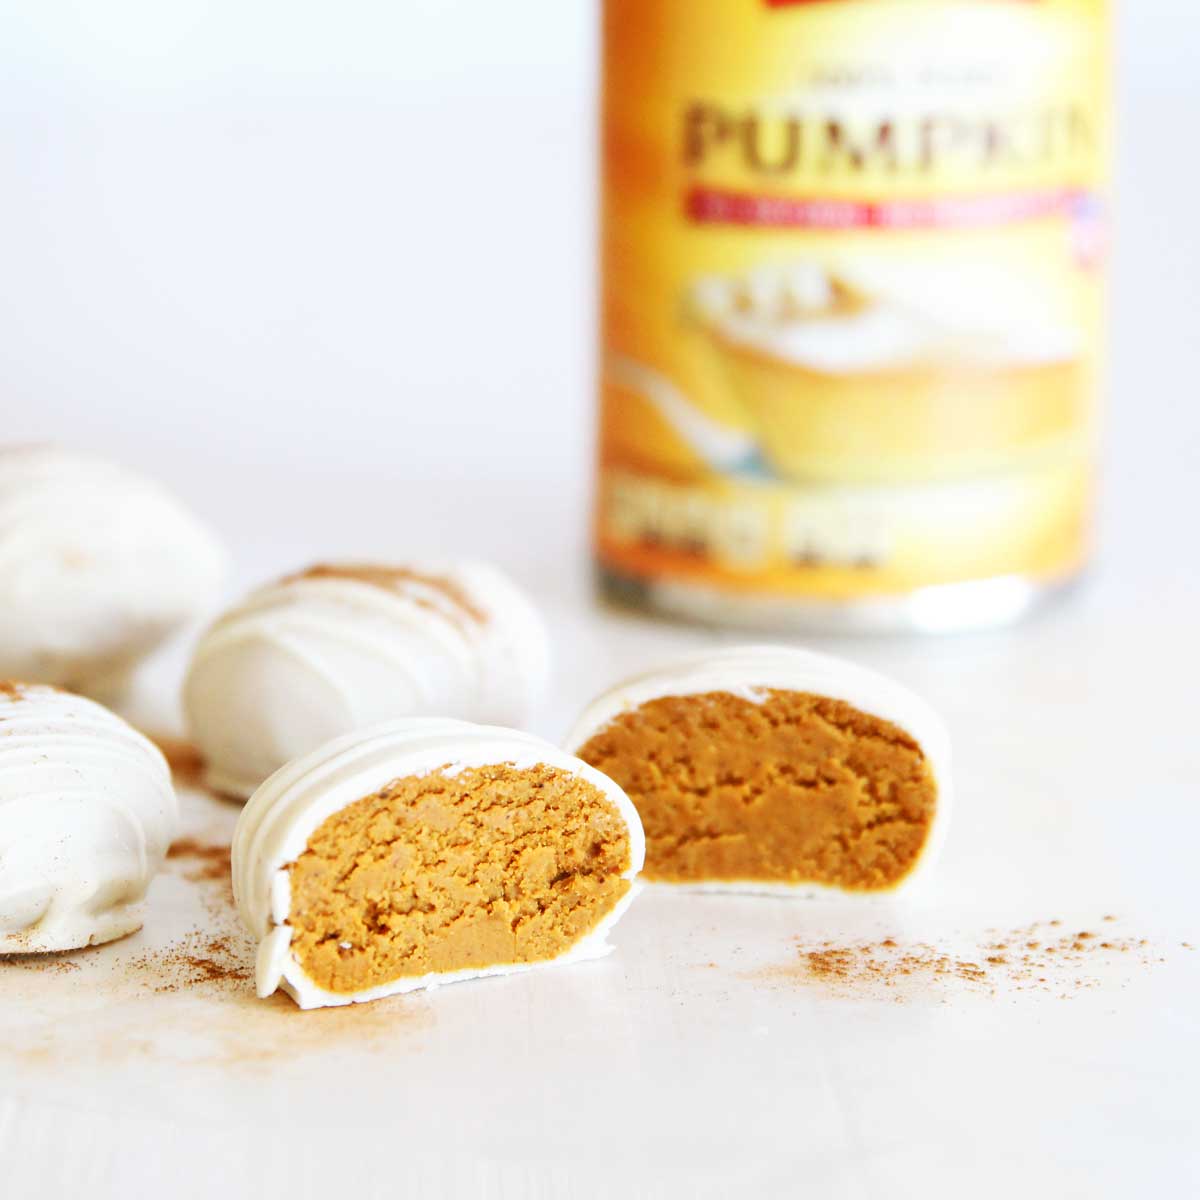 PB Fit Pumpkin Spice White Chocolate Easter Eggs (4-Ingredient Vegan Recipe!) - Keto Caramel Glaze